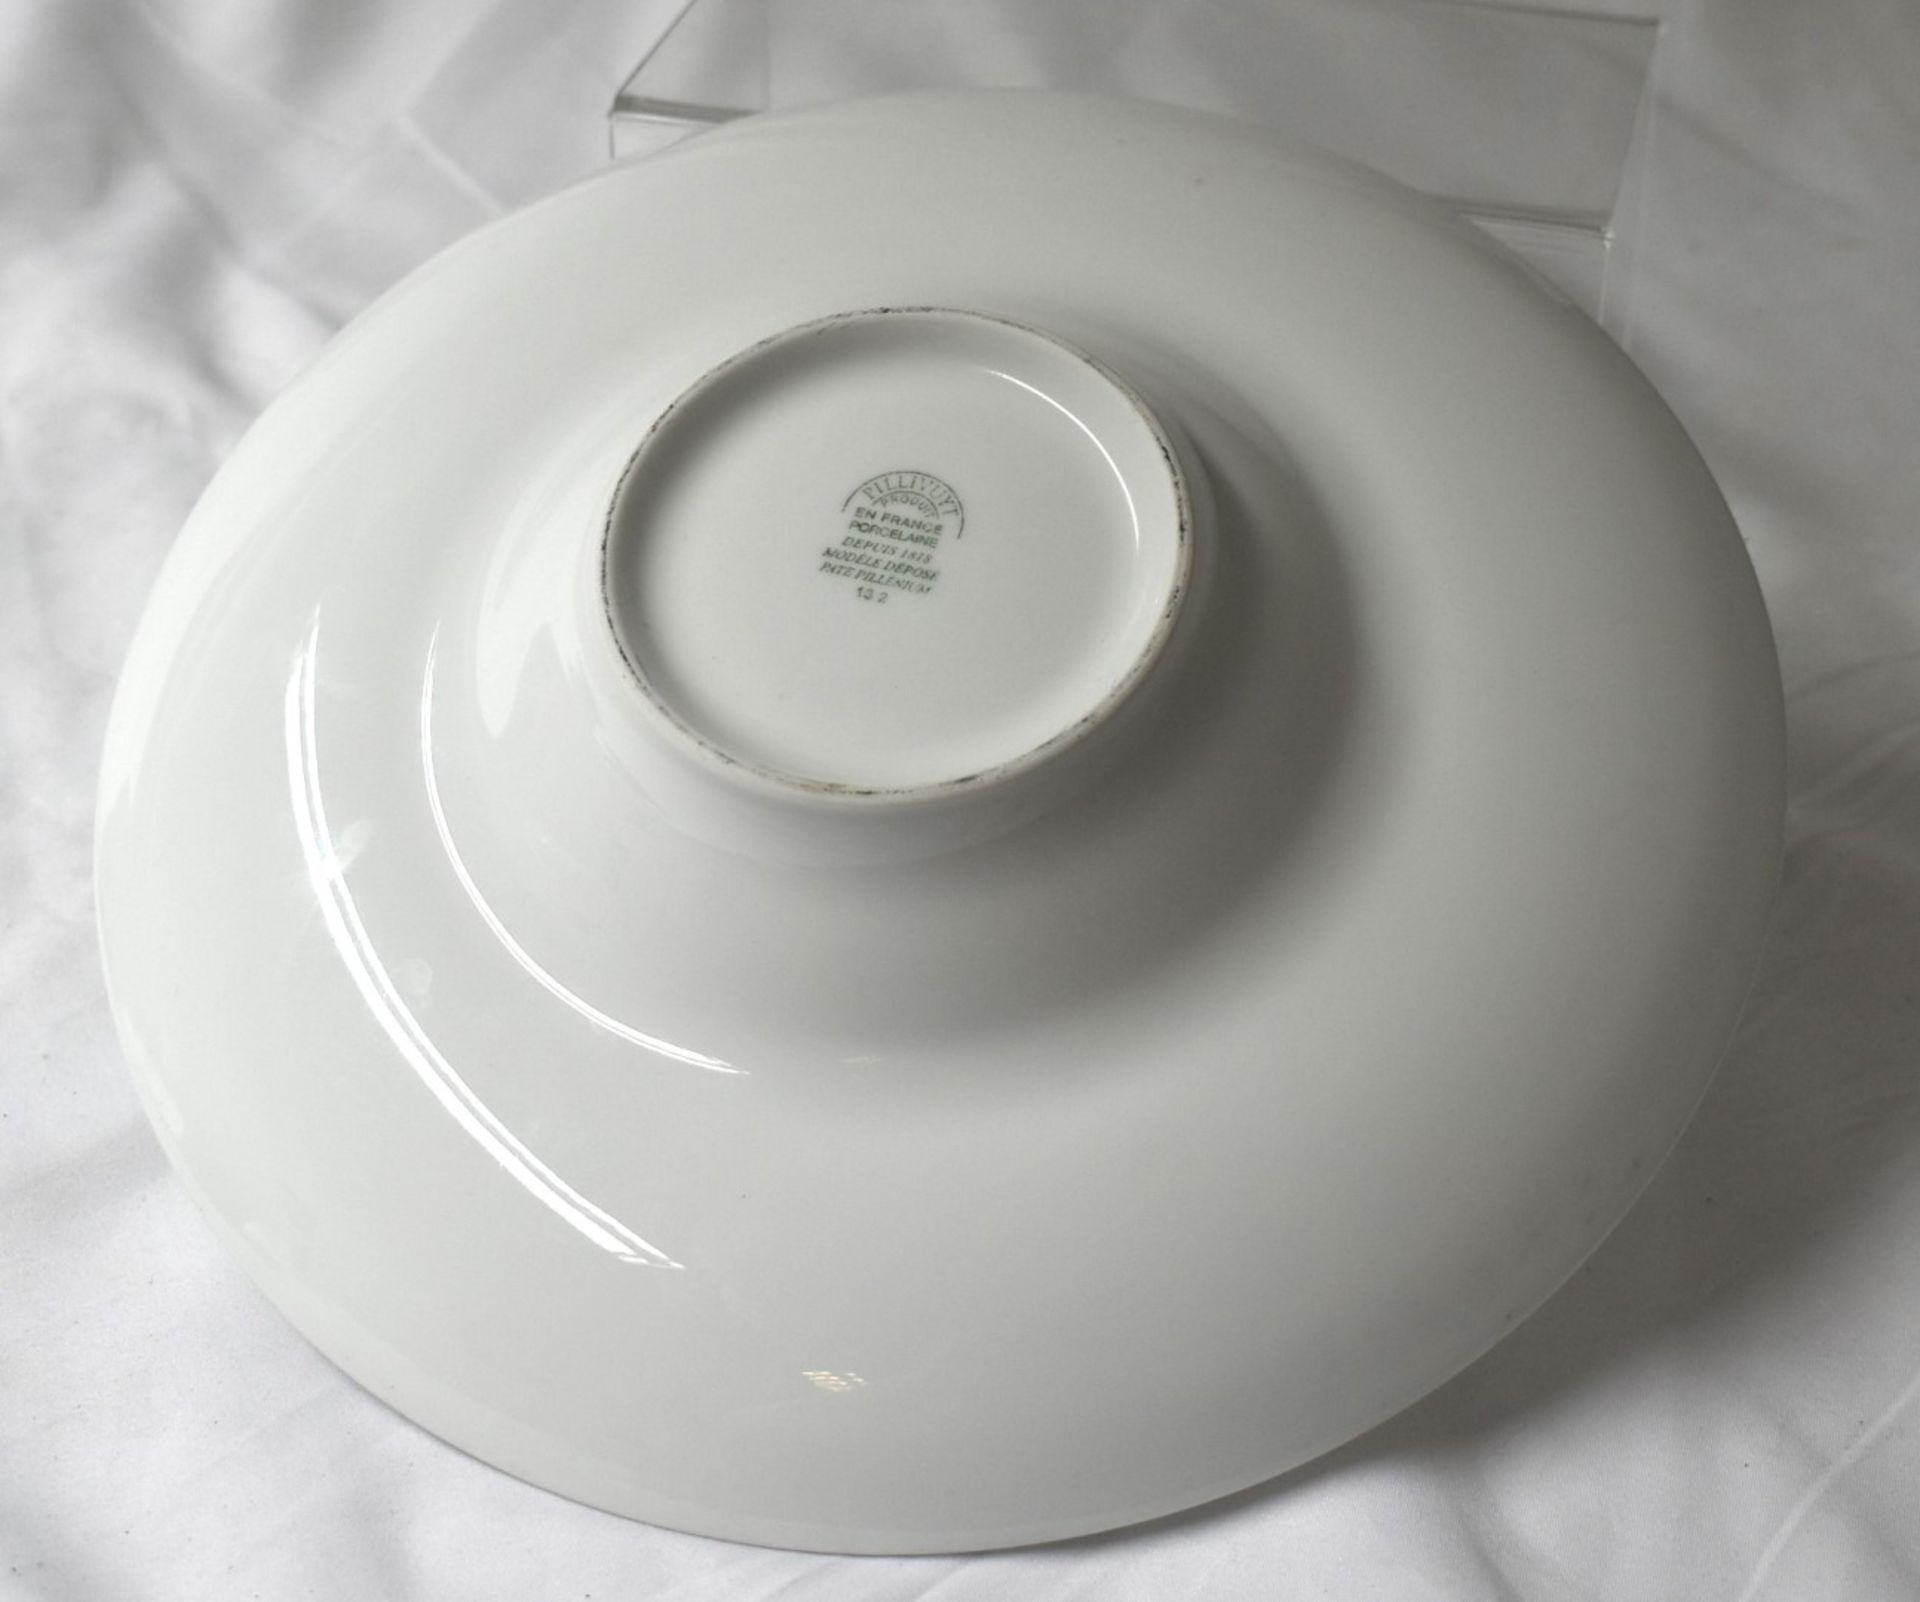 6 x Pillivuyt French Porcelain Wide Rim Dinner Bowls - 26cm Diameter - CL011 - Ref: PX279 - - Image 5 of 5